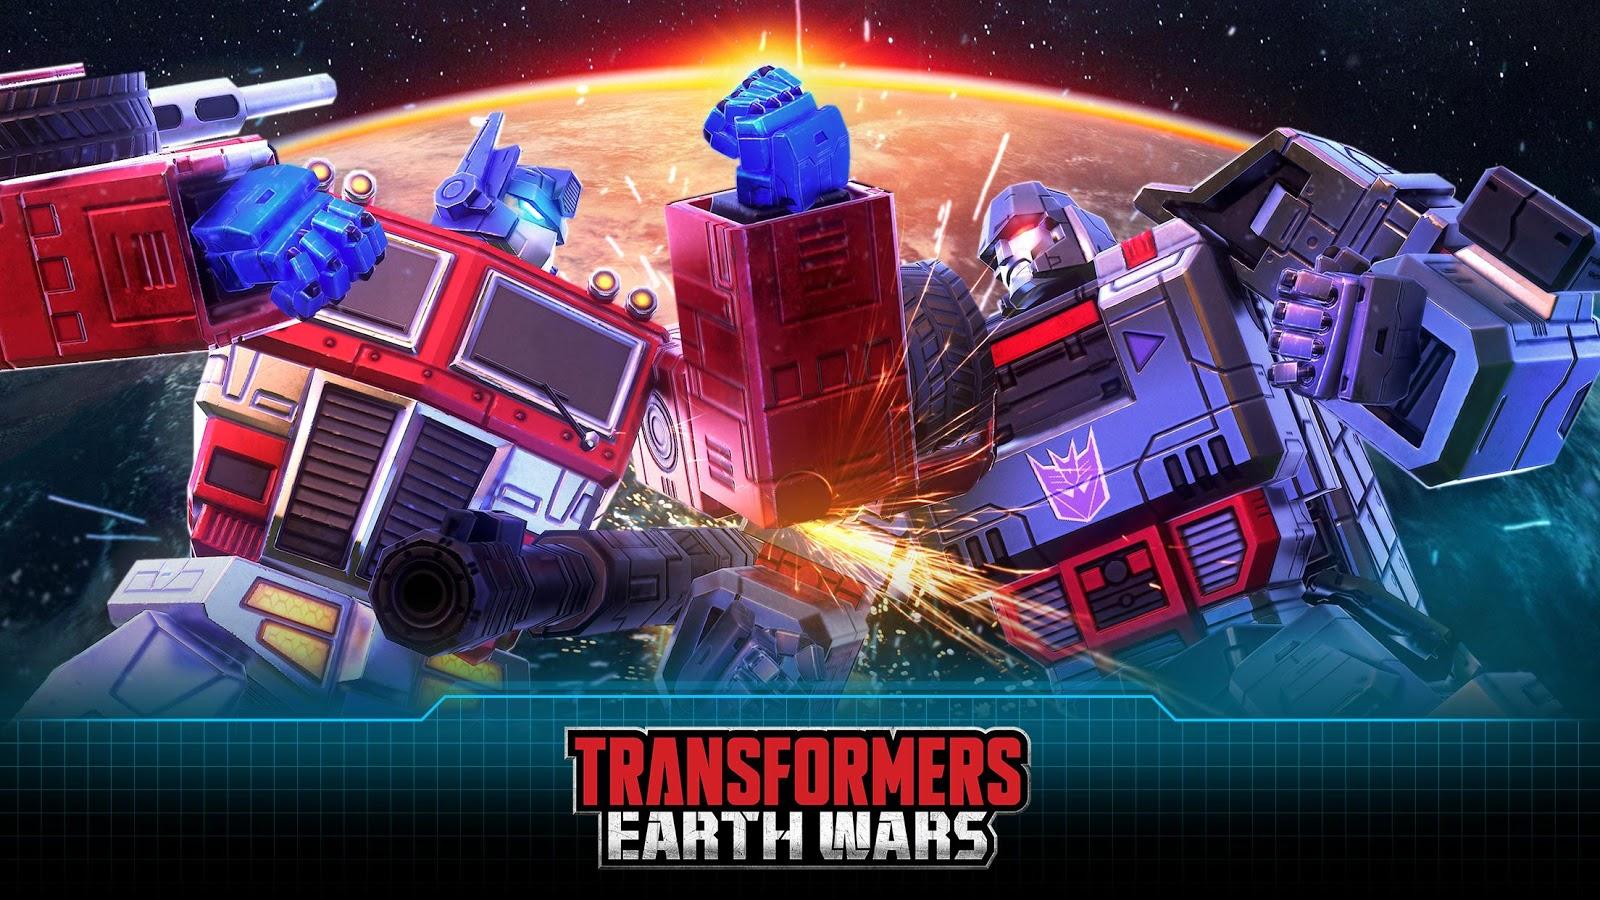 Transformers: Earth Wars pits Autobots vs. Decepticons